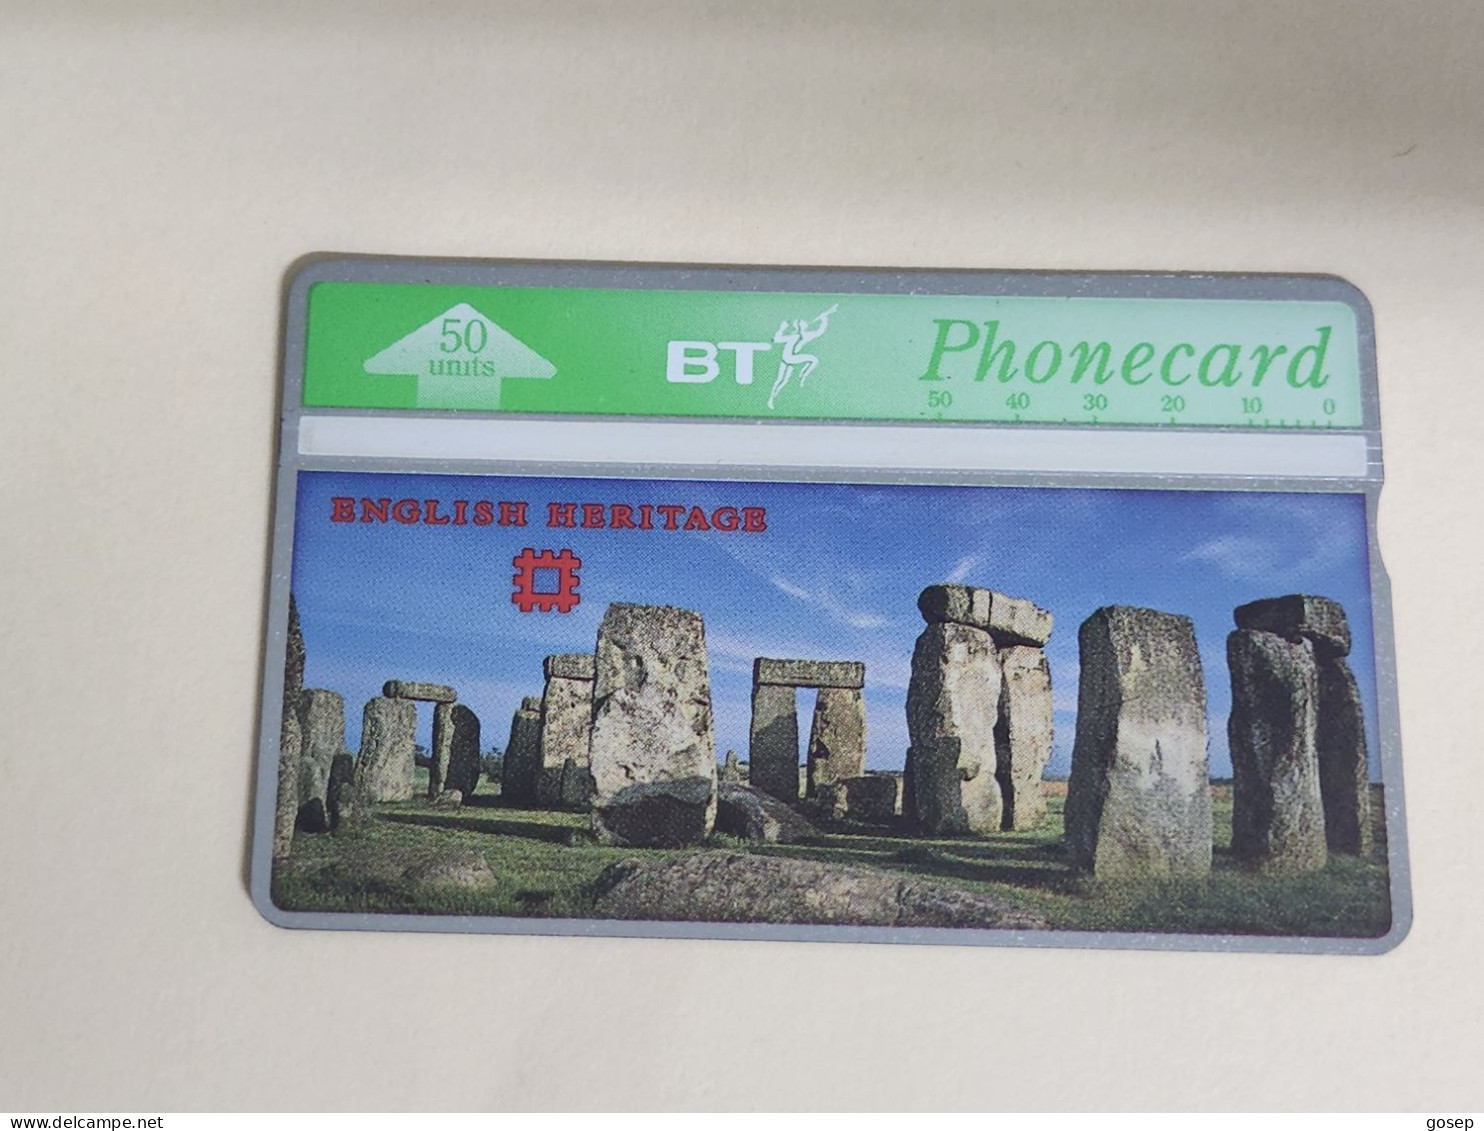 United Kingdom-(BTA110)-HERITAGE-stonehenge-(187)(50units)(508E91783)price Cataloge8.00£-mint+1card Prepiad Free - BT Advertising Issues